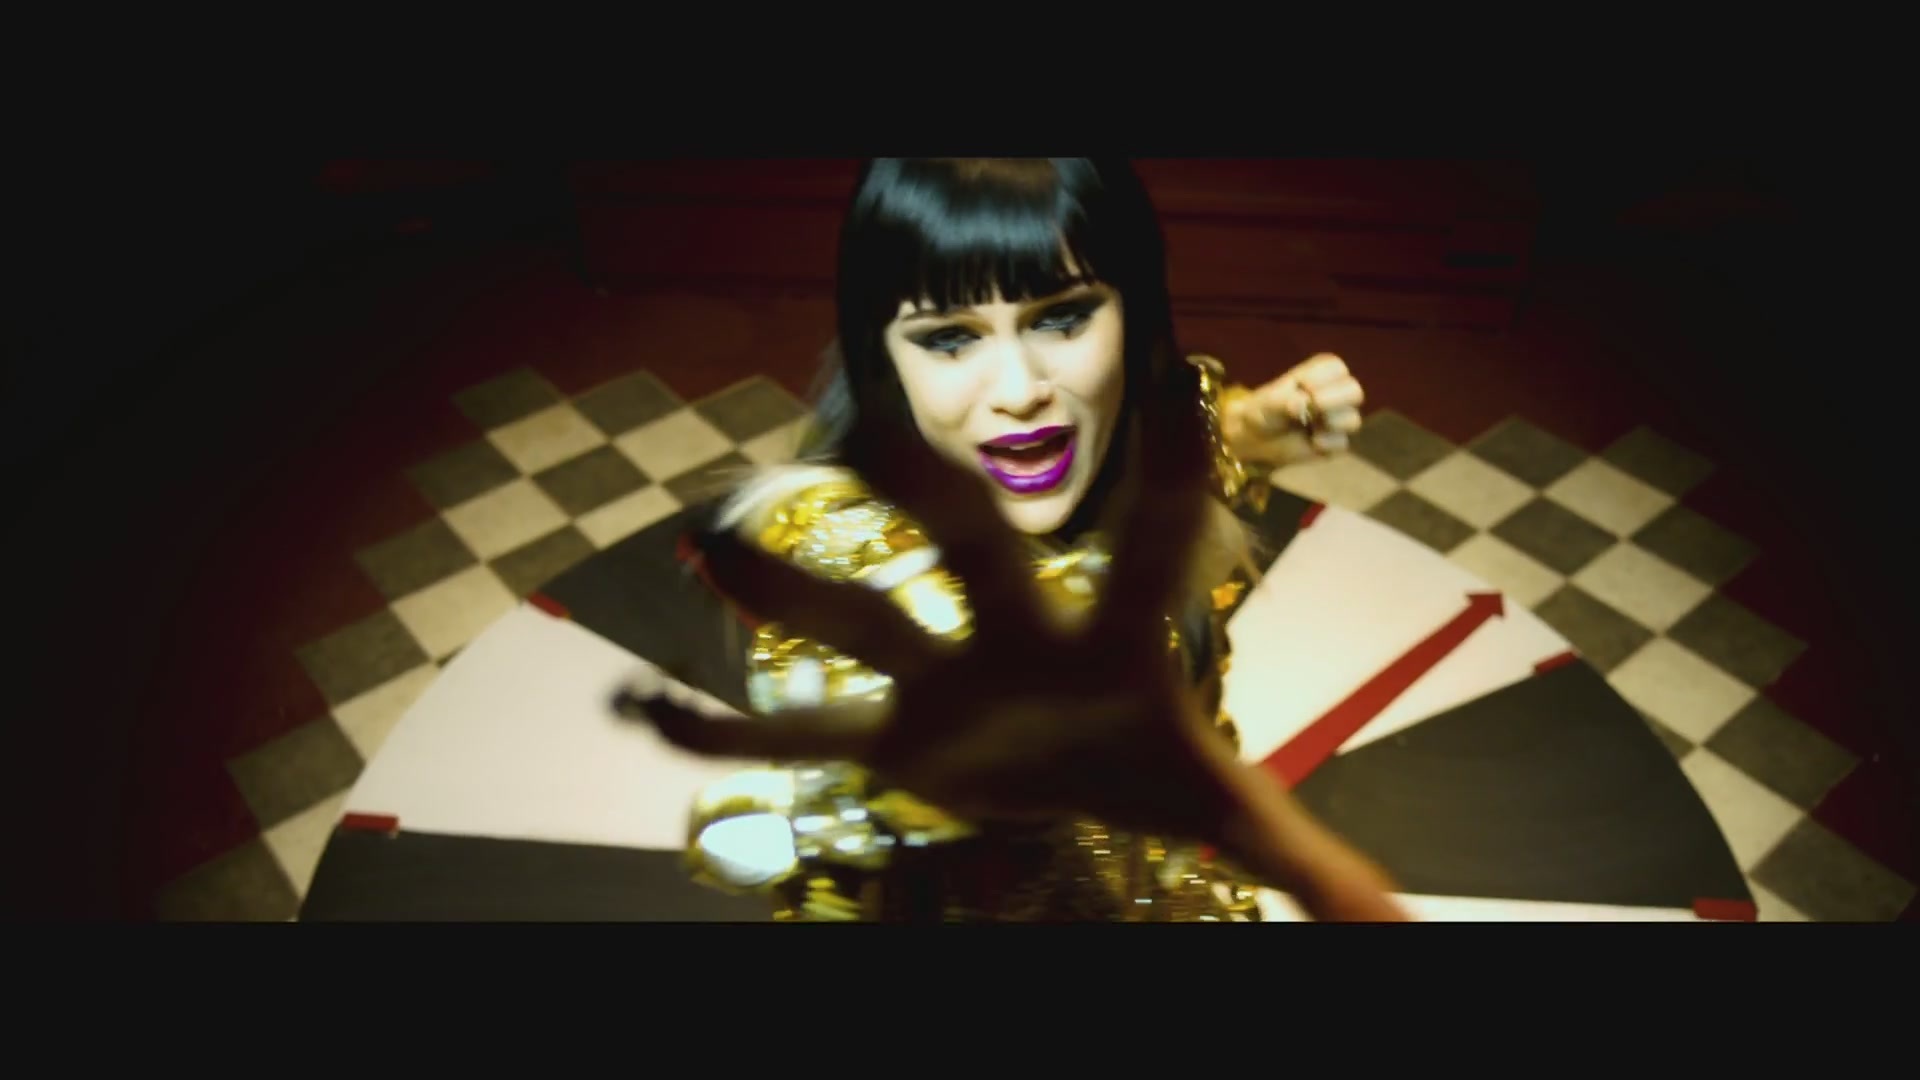 Nobody's Perfect [Music Video] - Jessie J Image (21700052) - Fanpop1920 x 1080